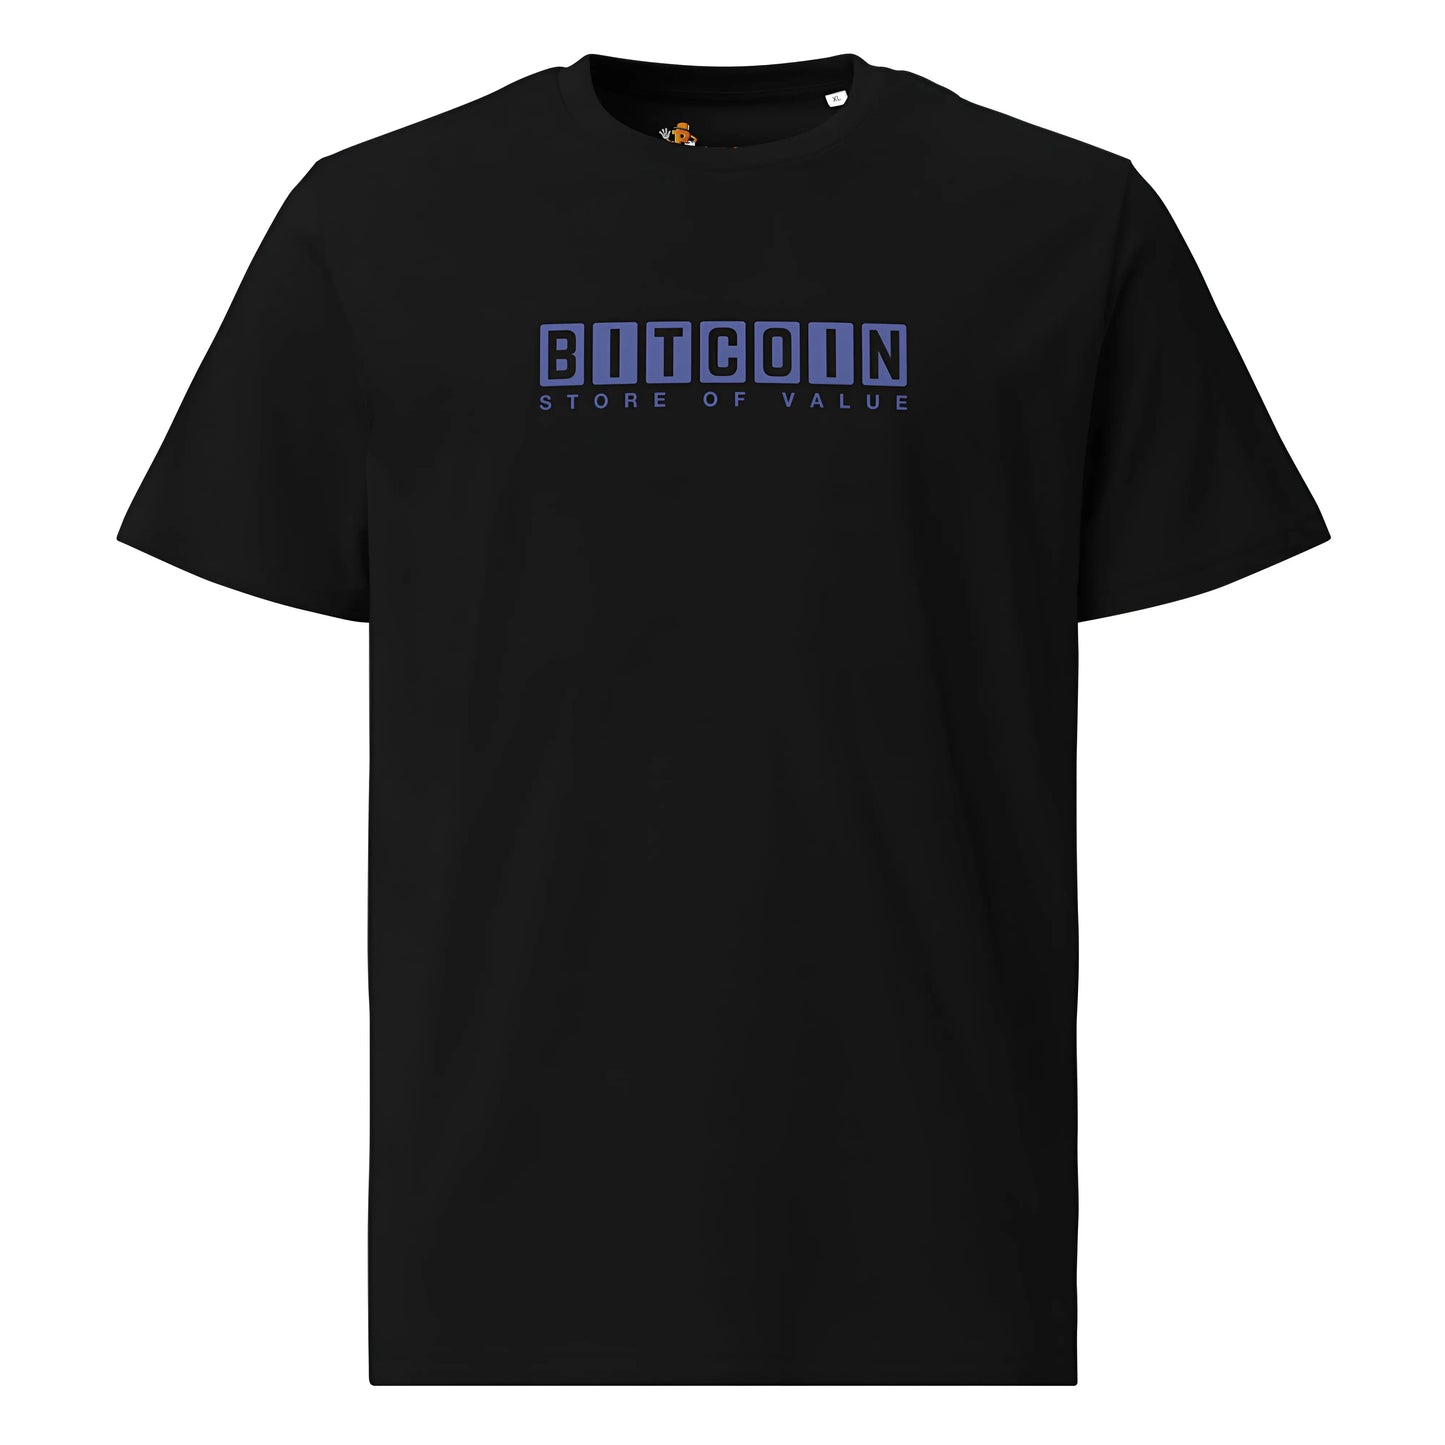 Bitcoin - Store of Value - Premium Unisex Organic Cotton Bitcoin T-shirt Black